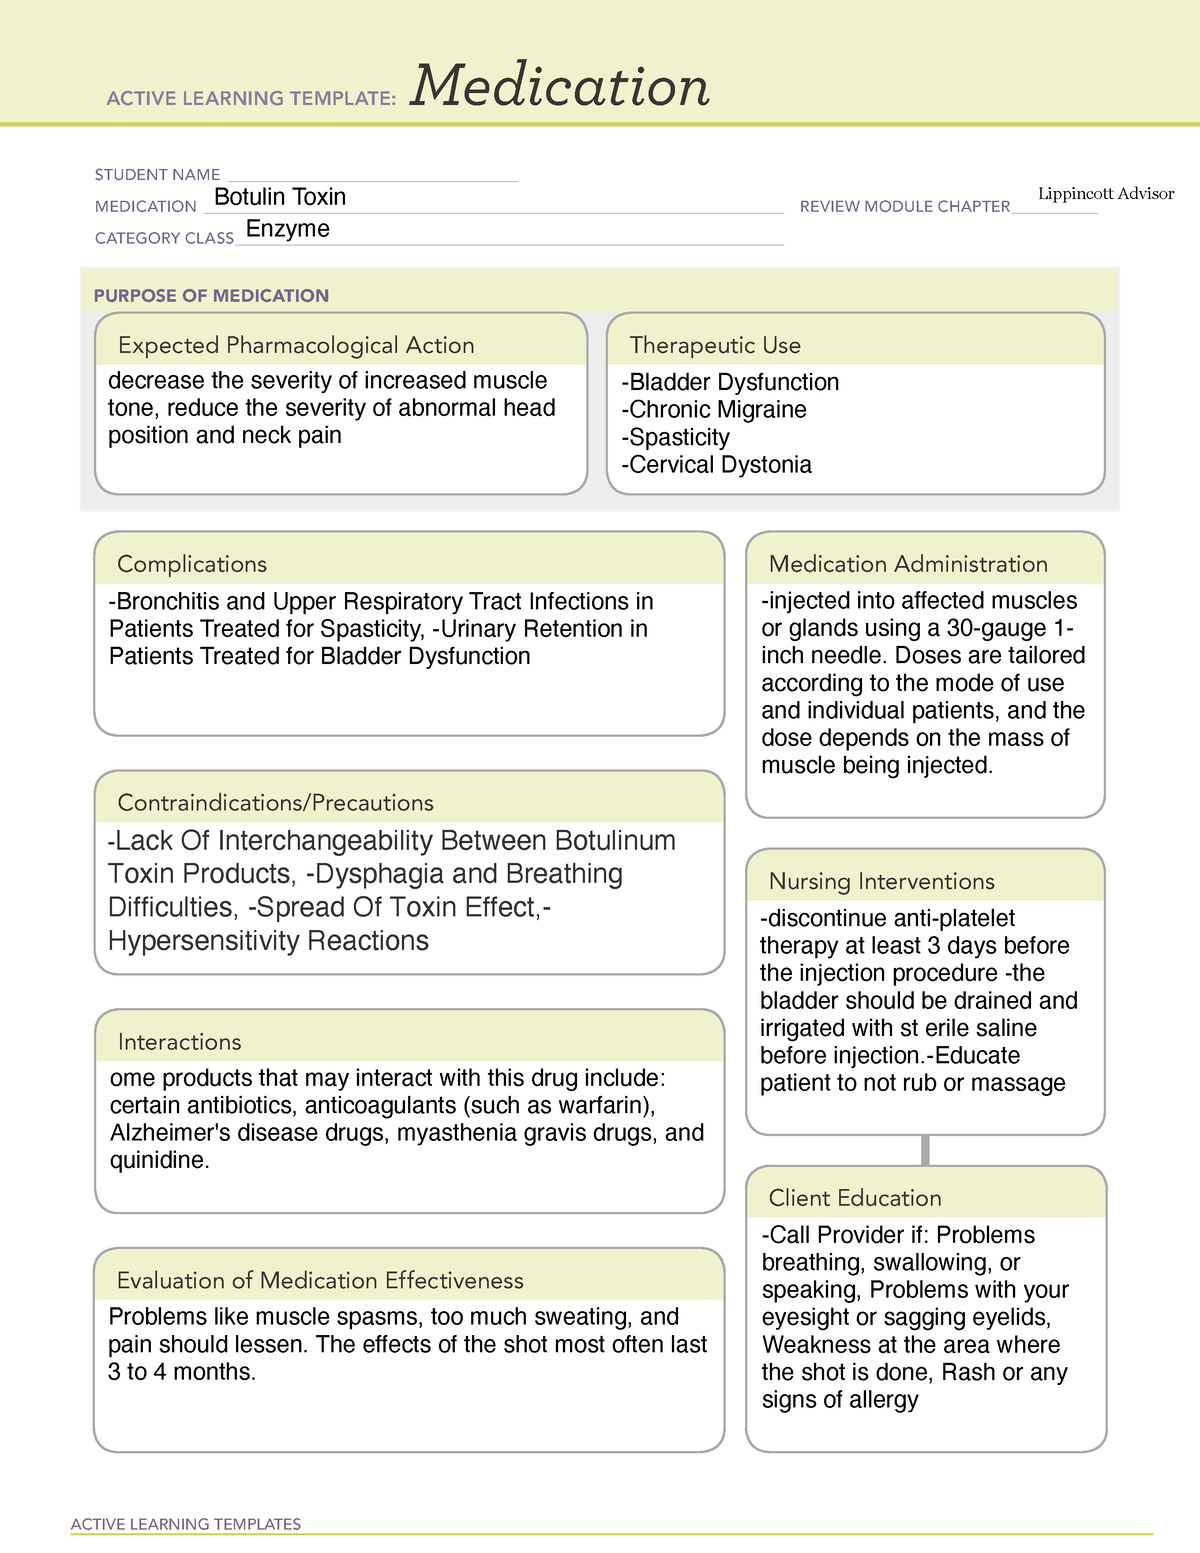 ati-medication-template-botulin-toxin-active-learning-templates